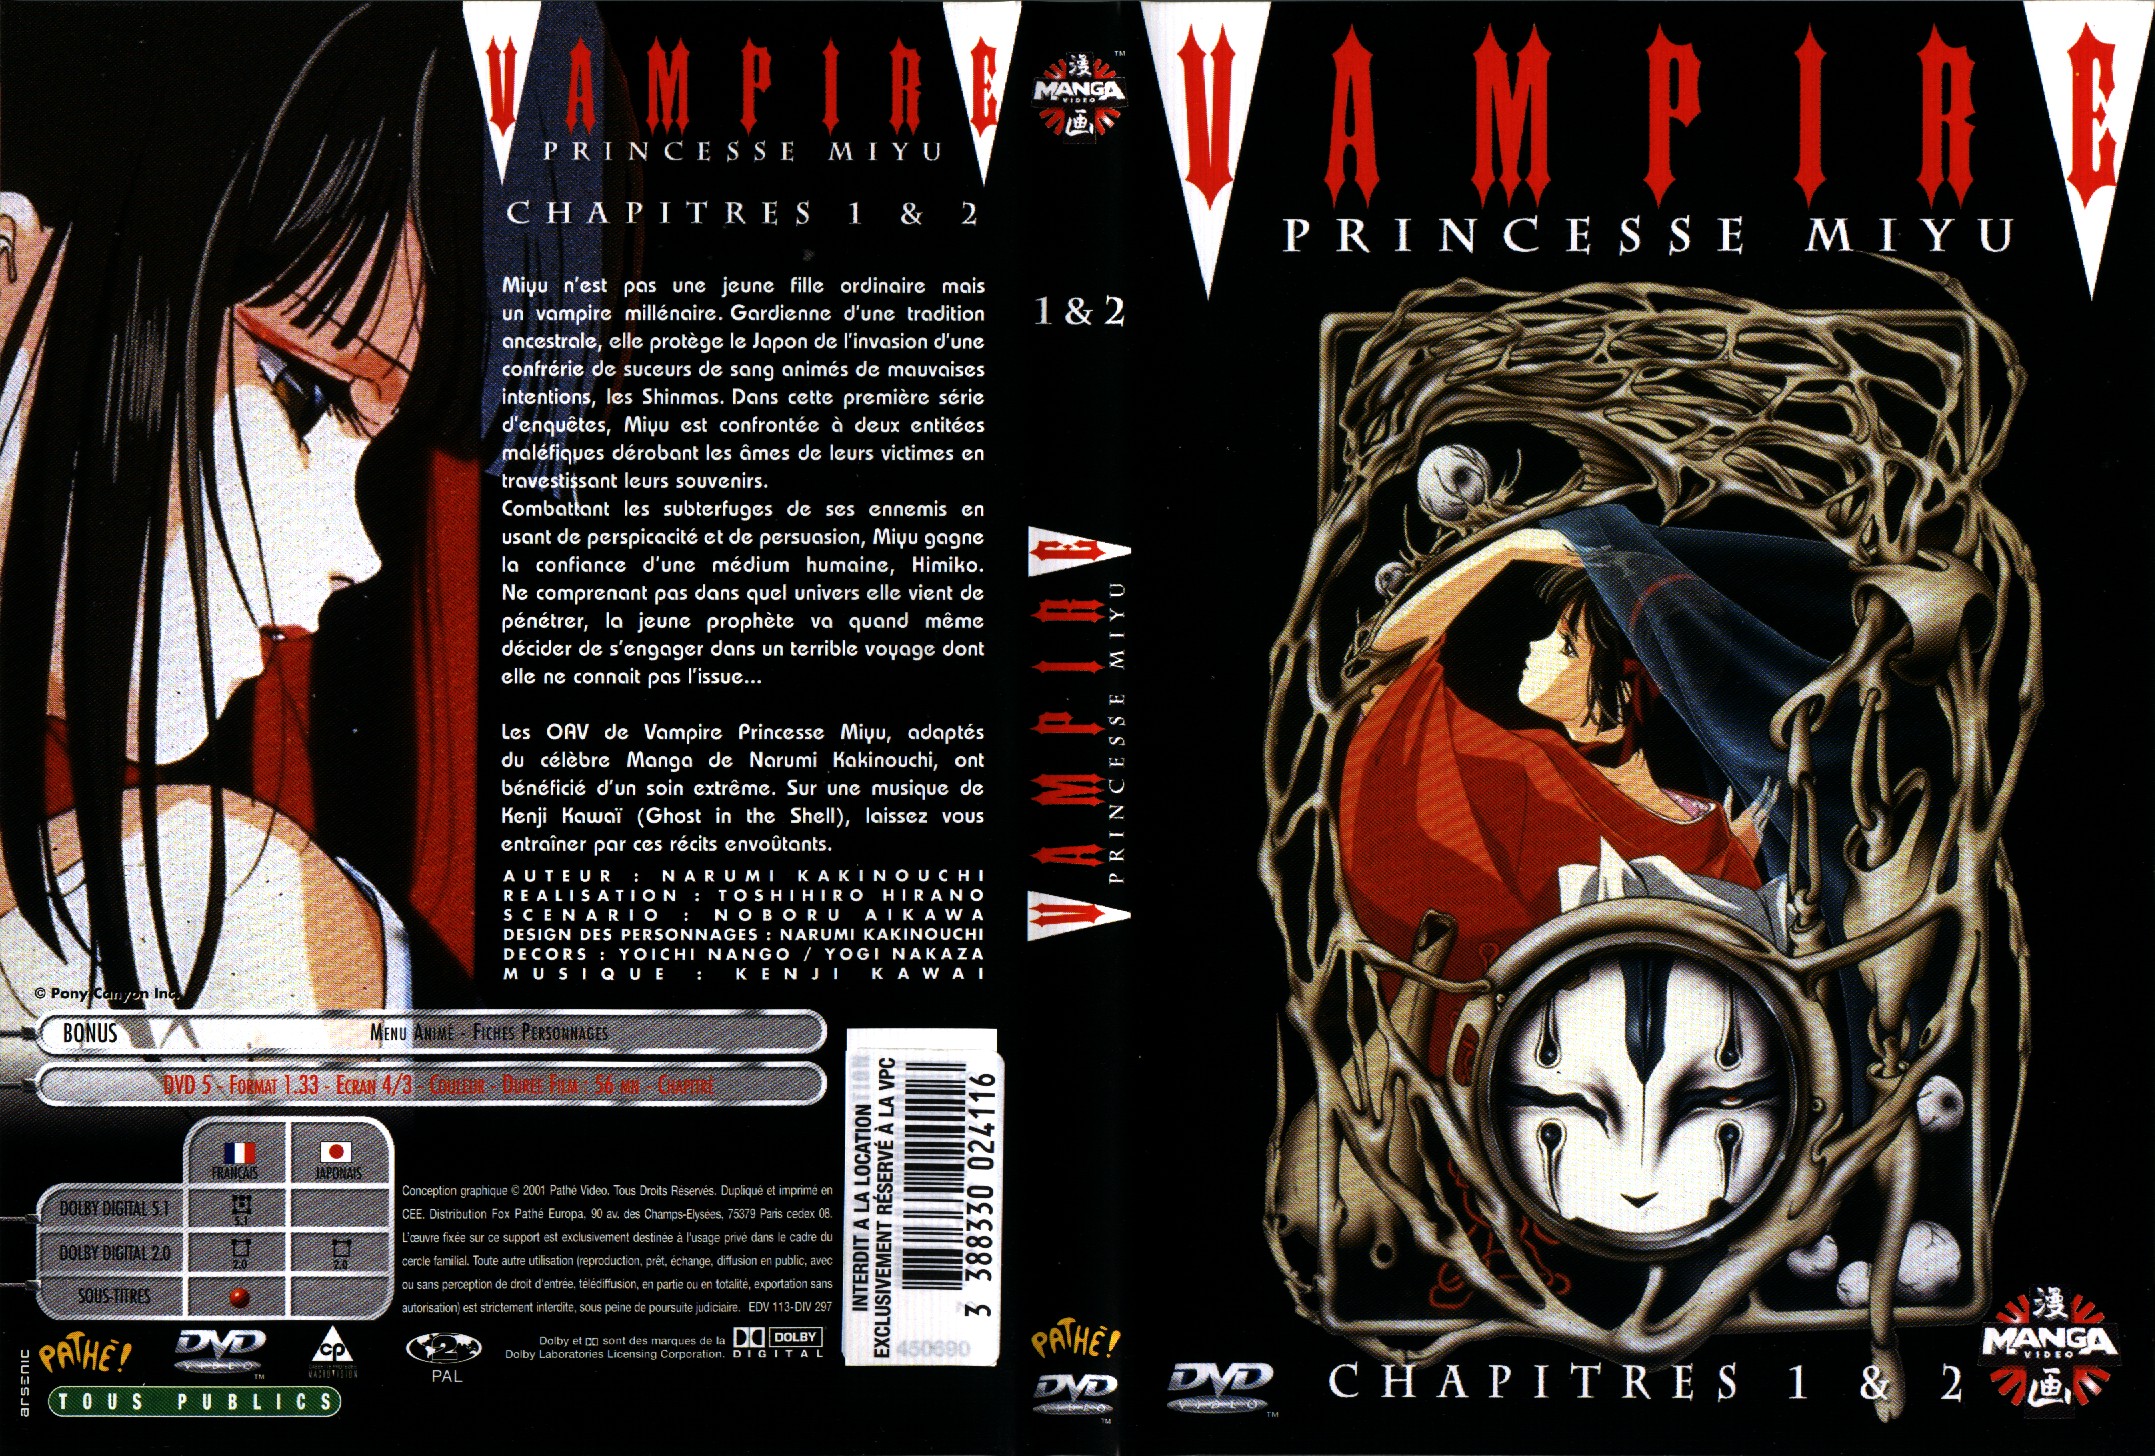 Jaquette DVD Vampire princess miyu vol 1